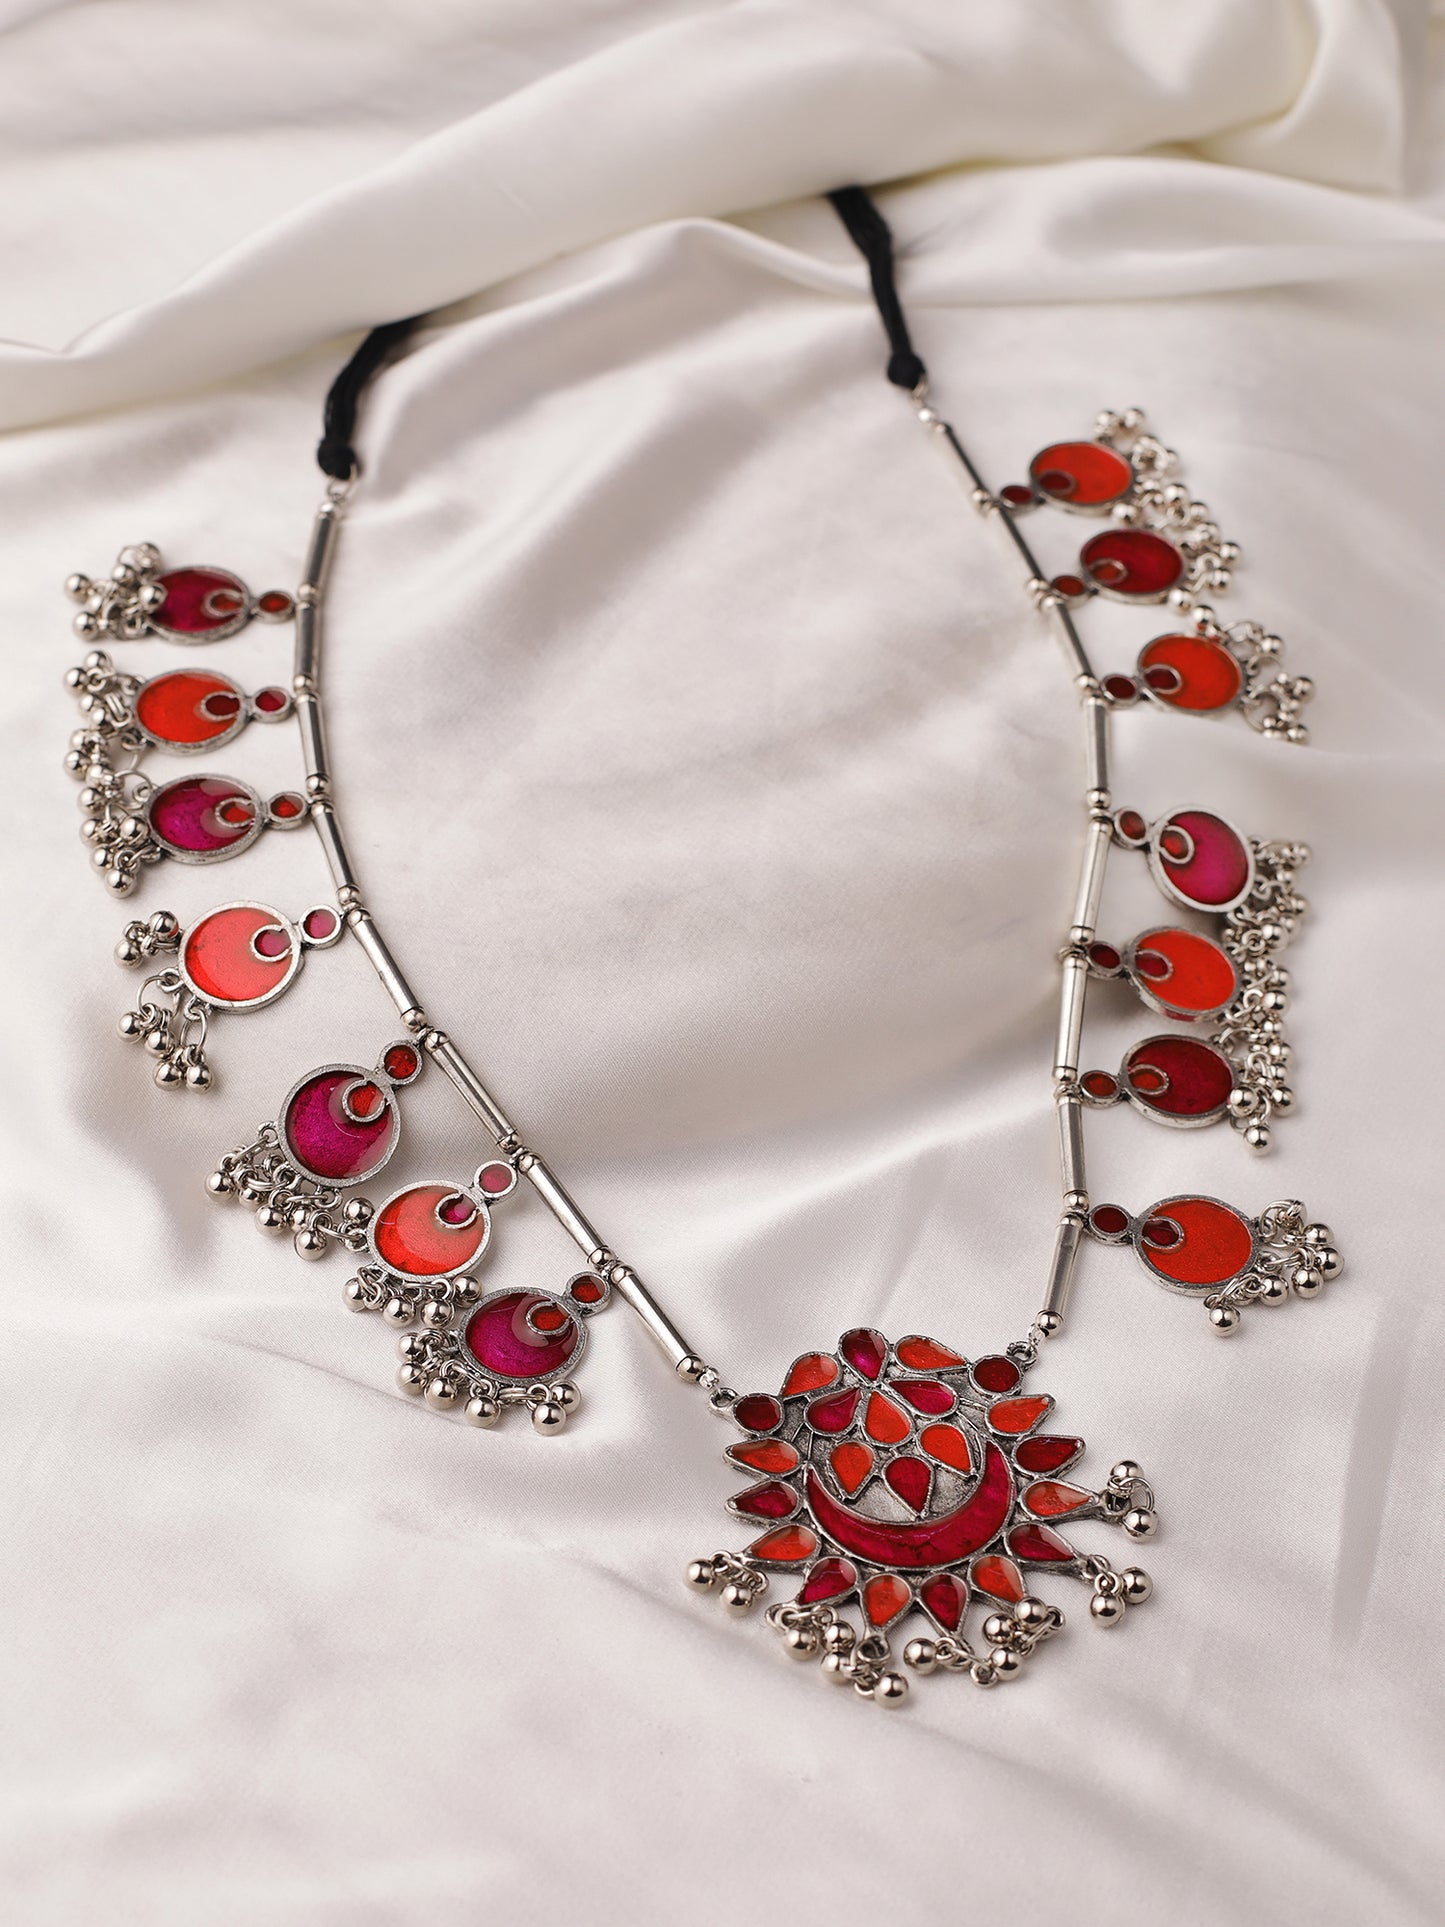 The Auriga Meenakari Necklace in Pink & Orange